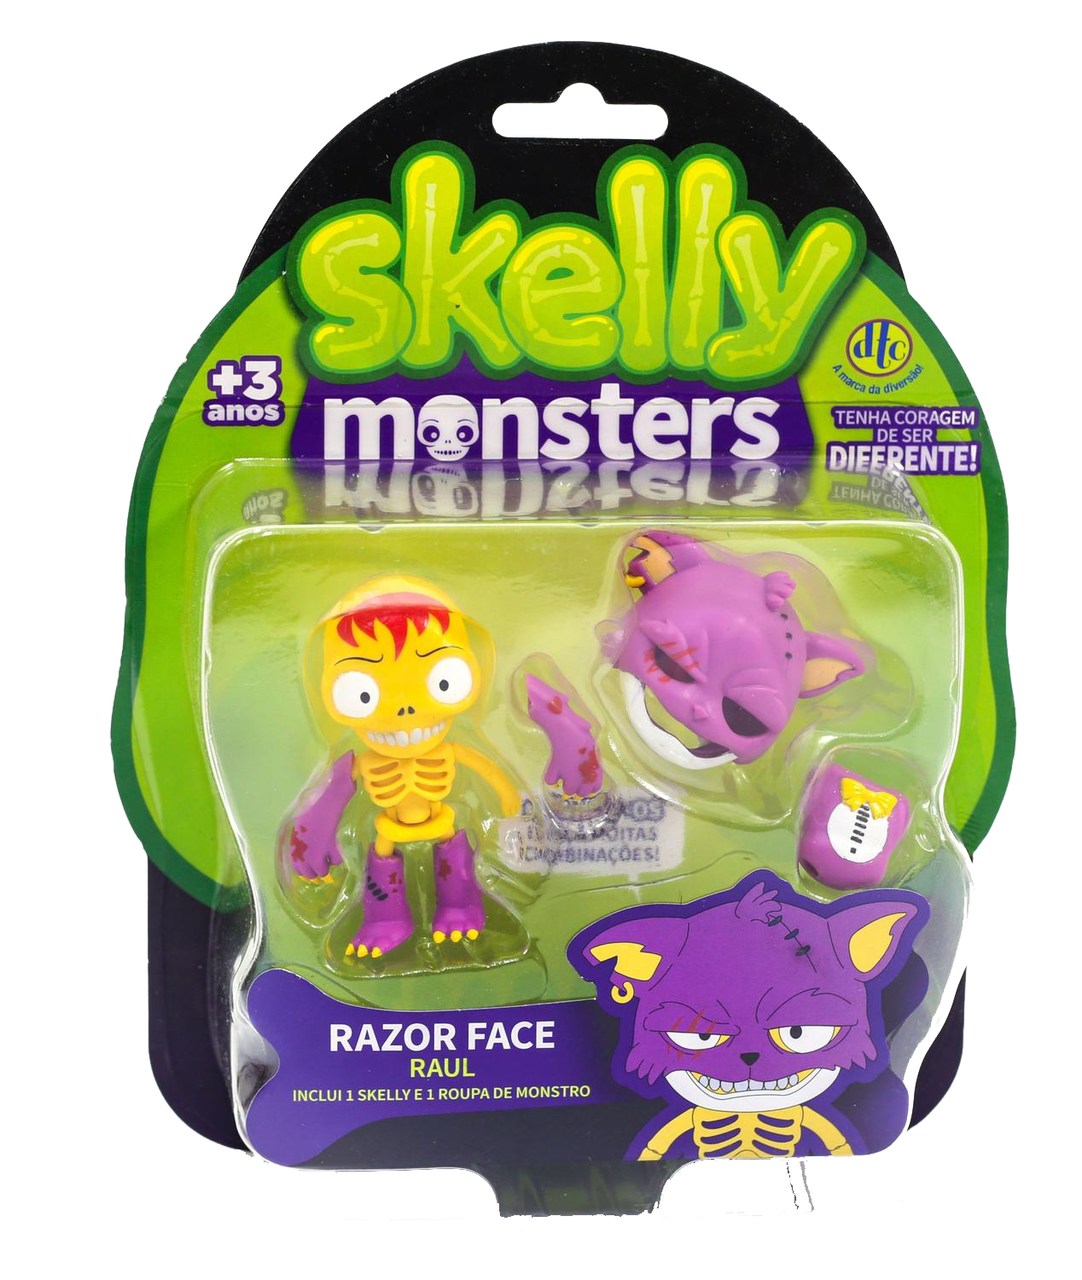 Boneco Caveira Skelly Monsters Razor Face - Raul - Dtc